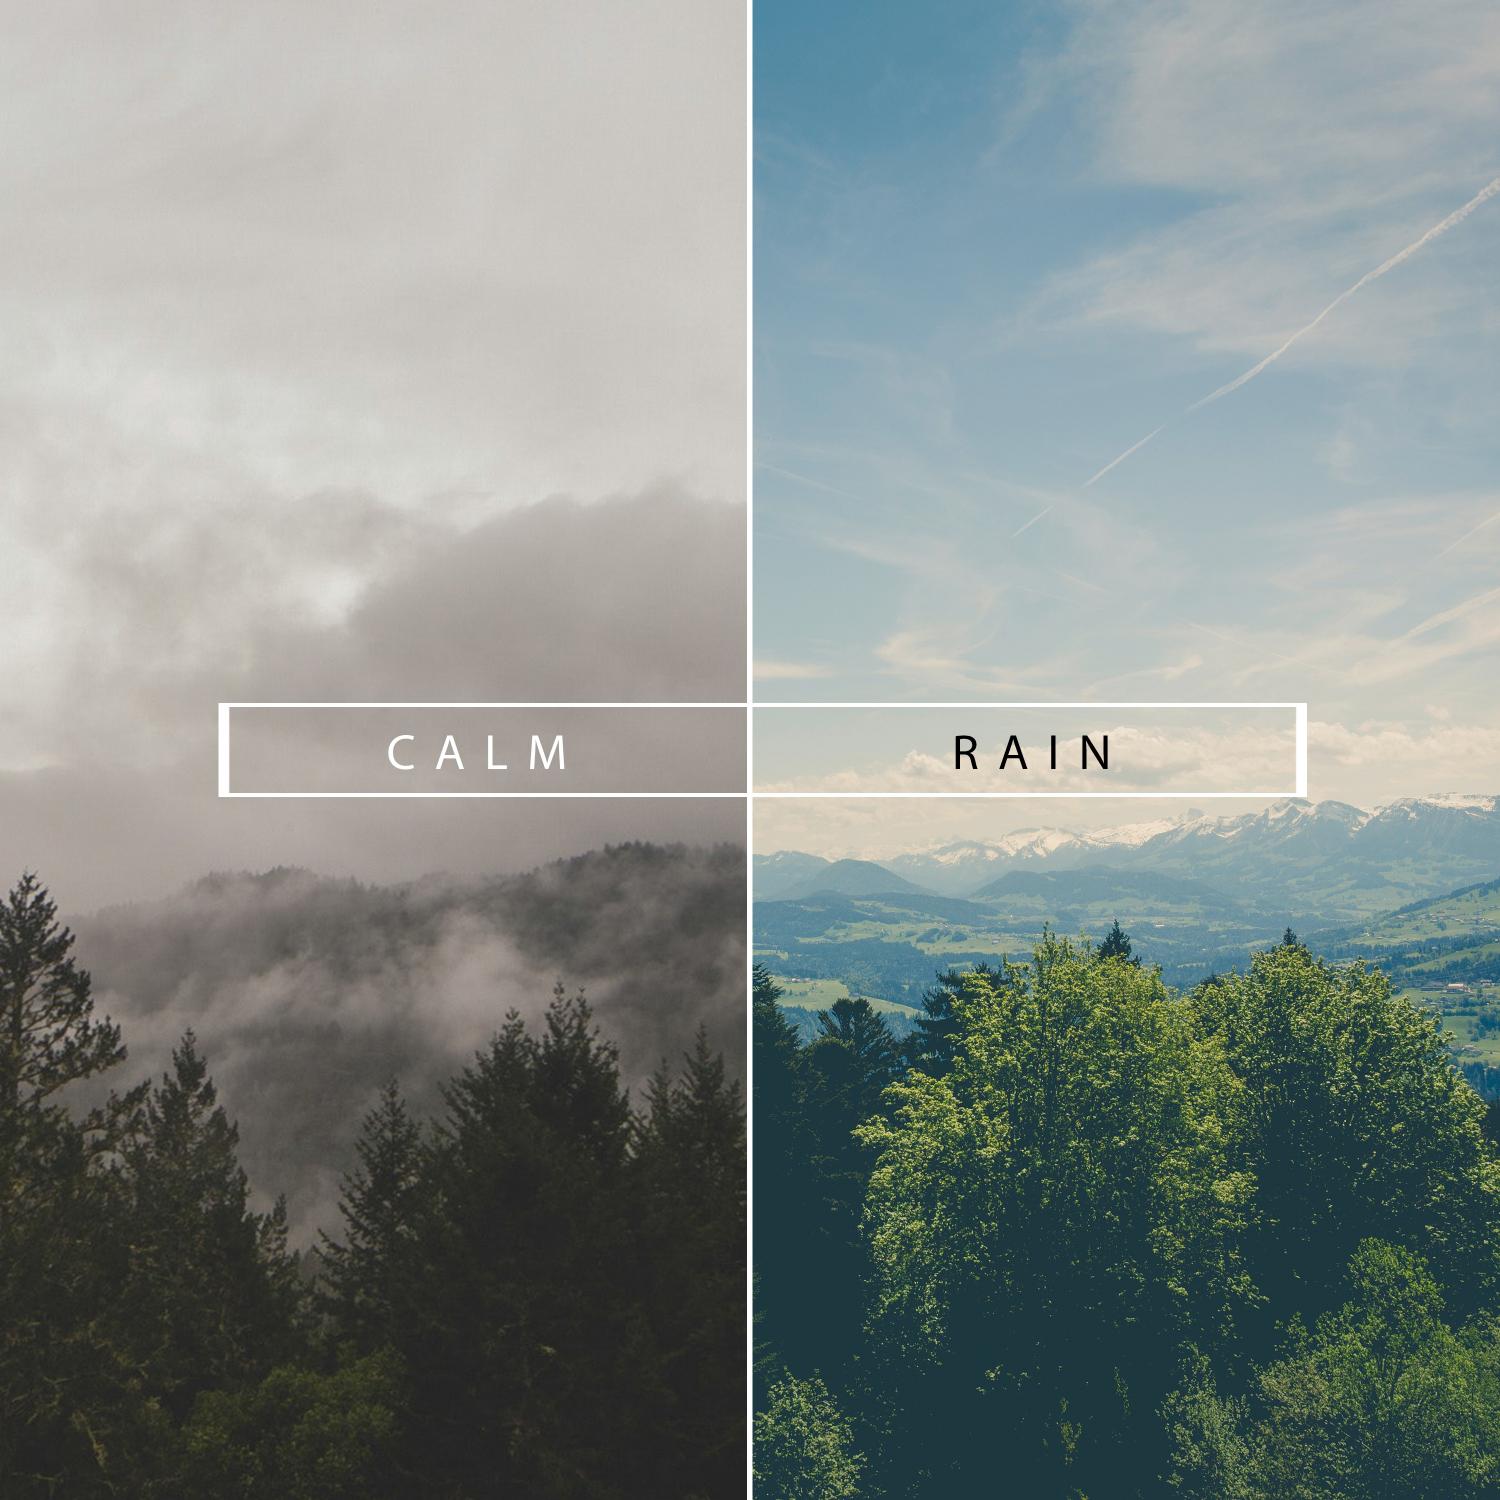 2017 Calm Rain Sounds - Spa, White Noise & Meditation